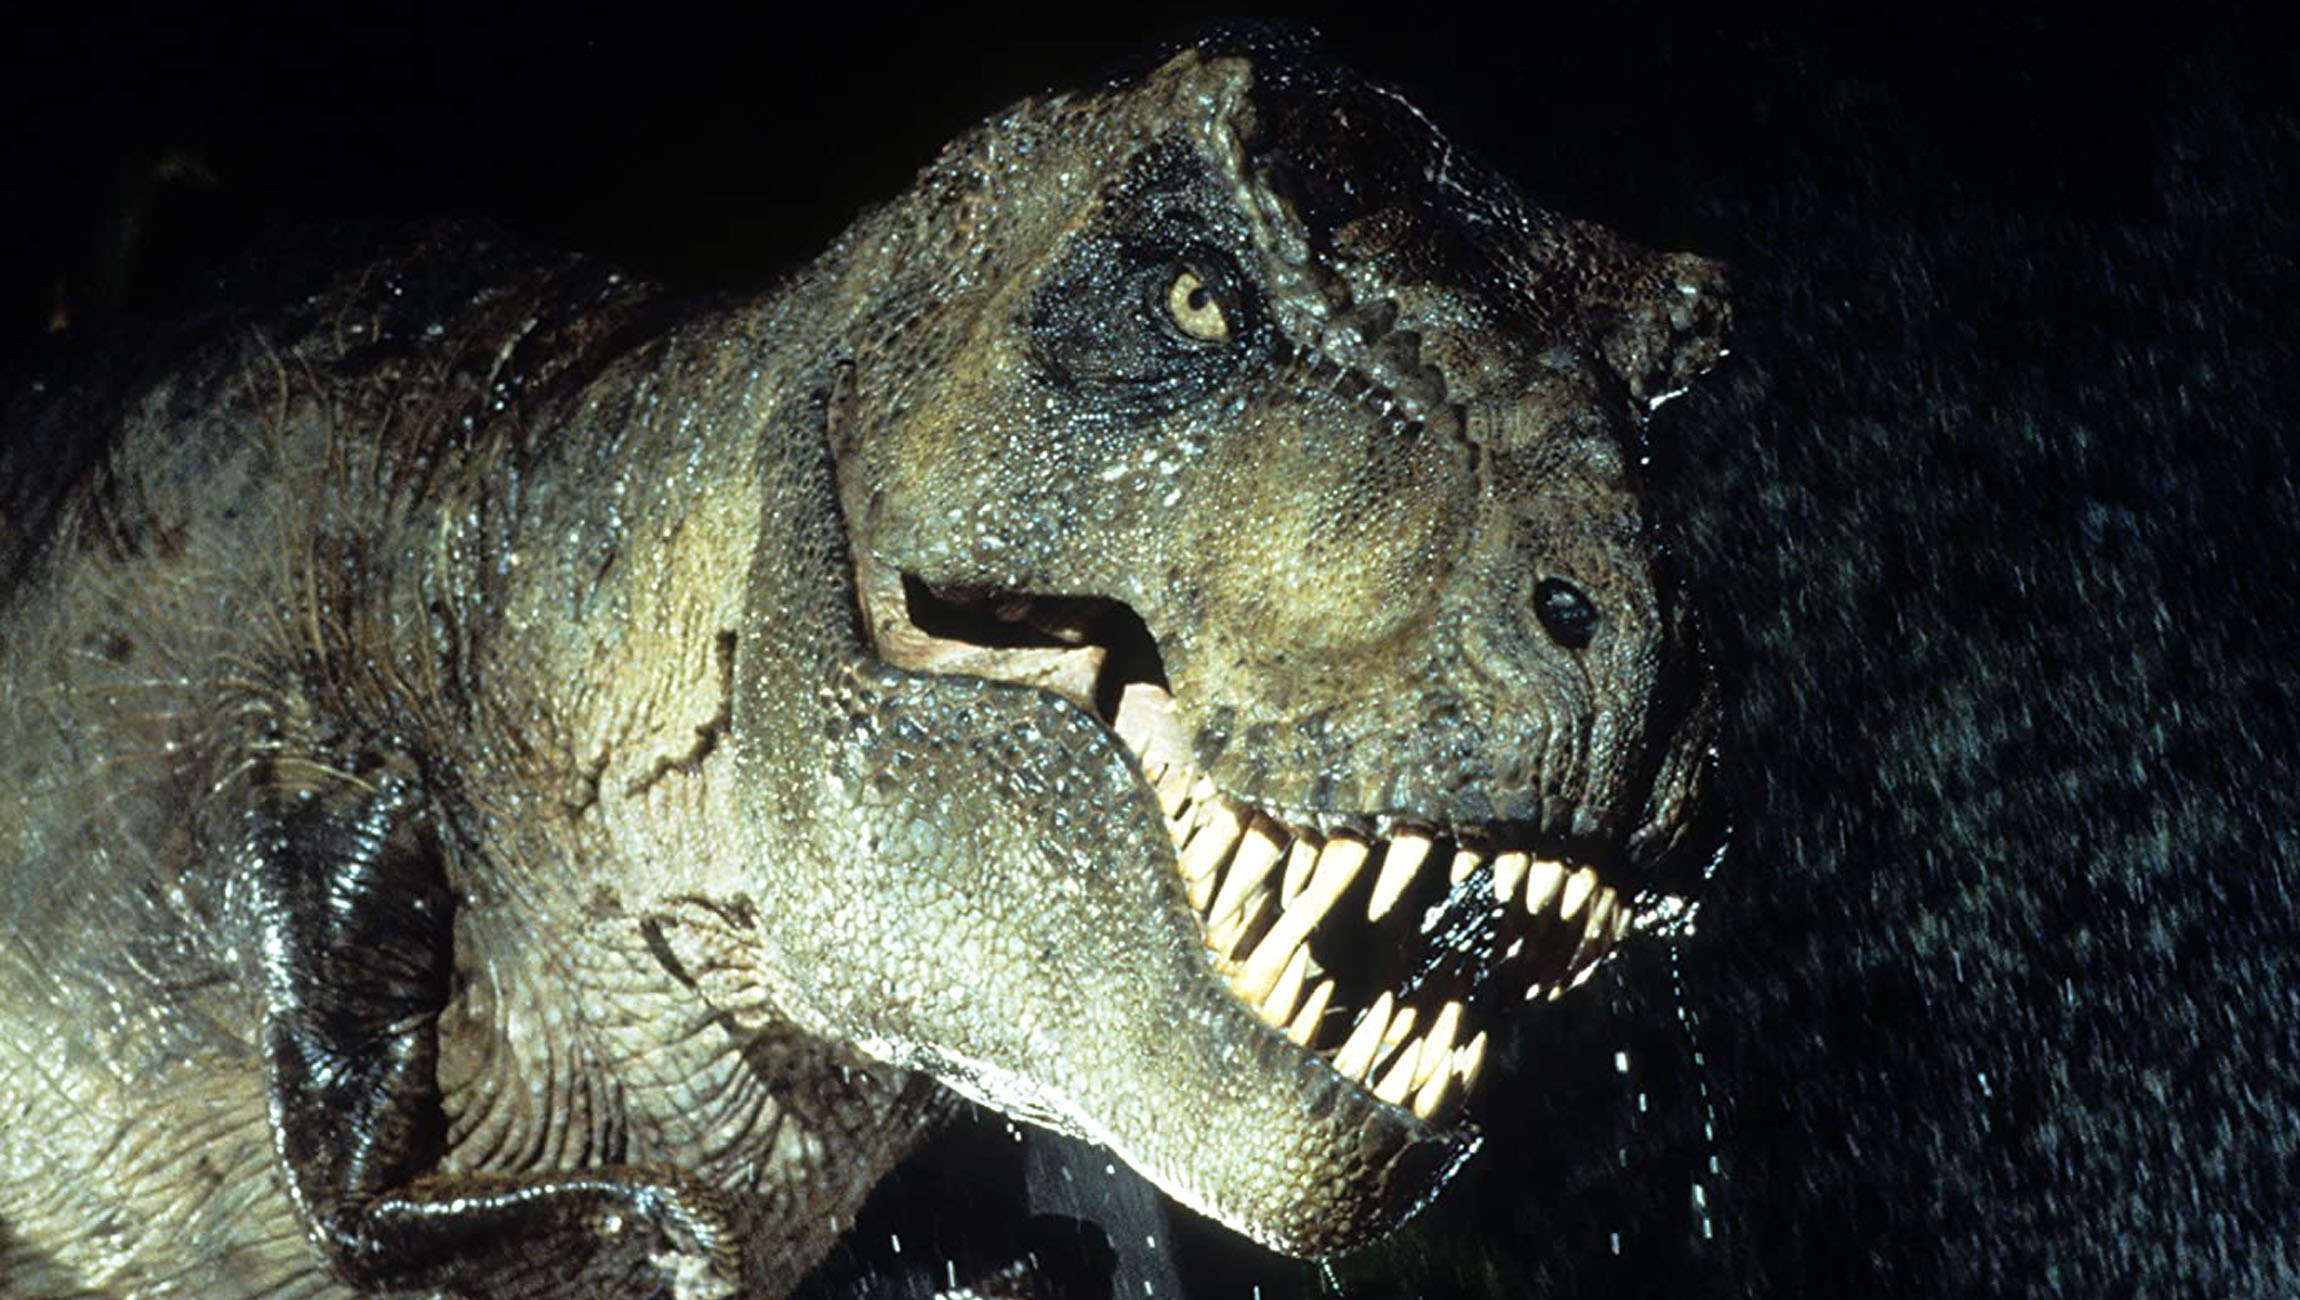 T. Rex from Jurassic Park